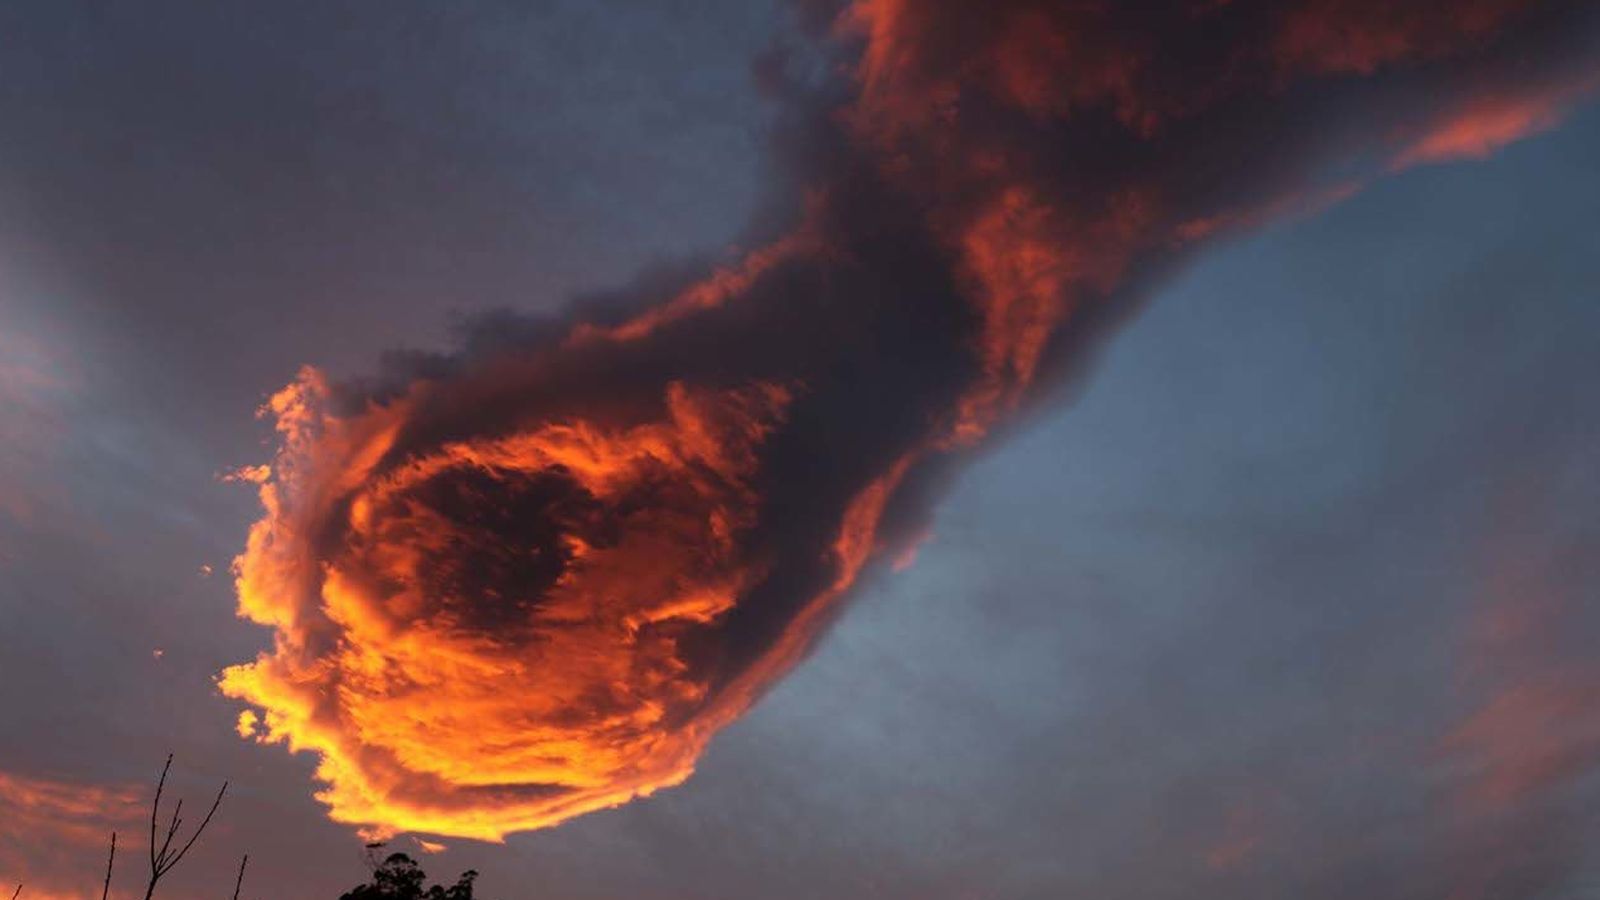 Foto: La nube bautizada como "la mano de Dios" fotografiada en Madeira. (ROGERIO PACHECO/METEOMADEIRA) 